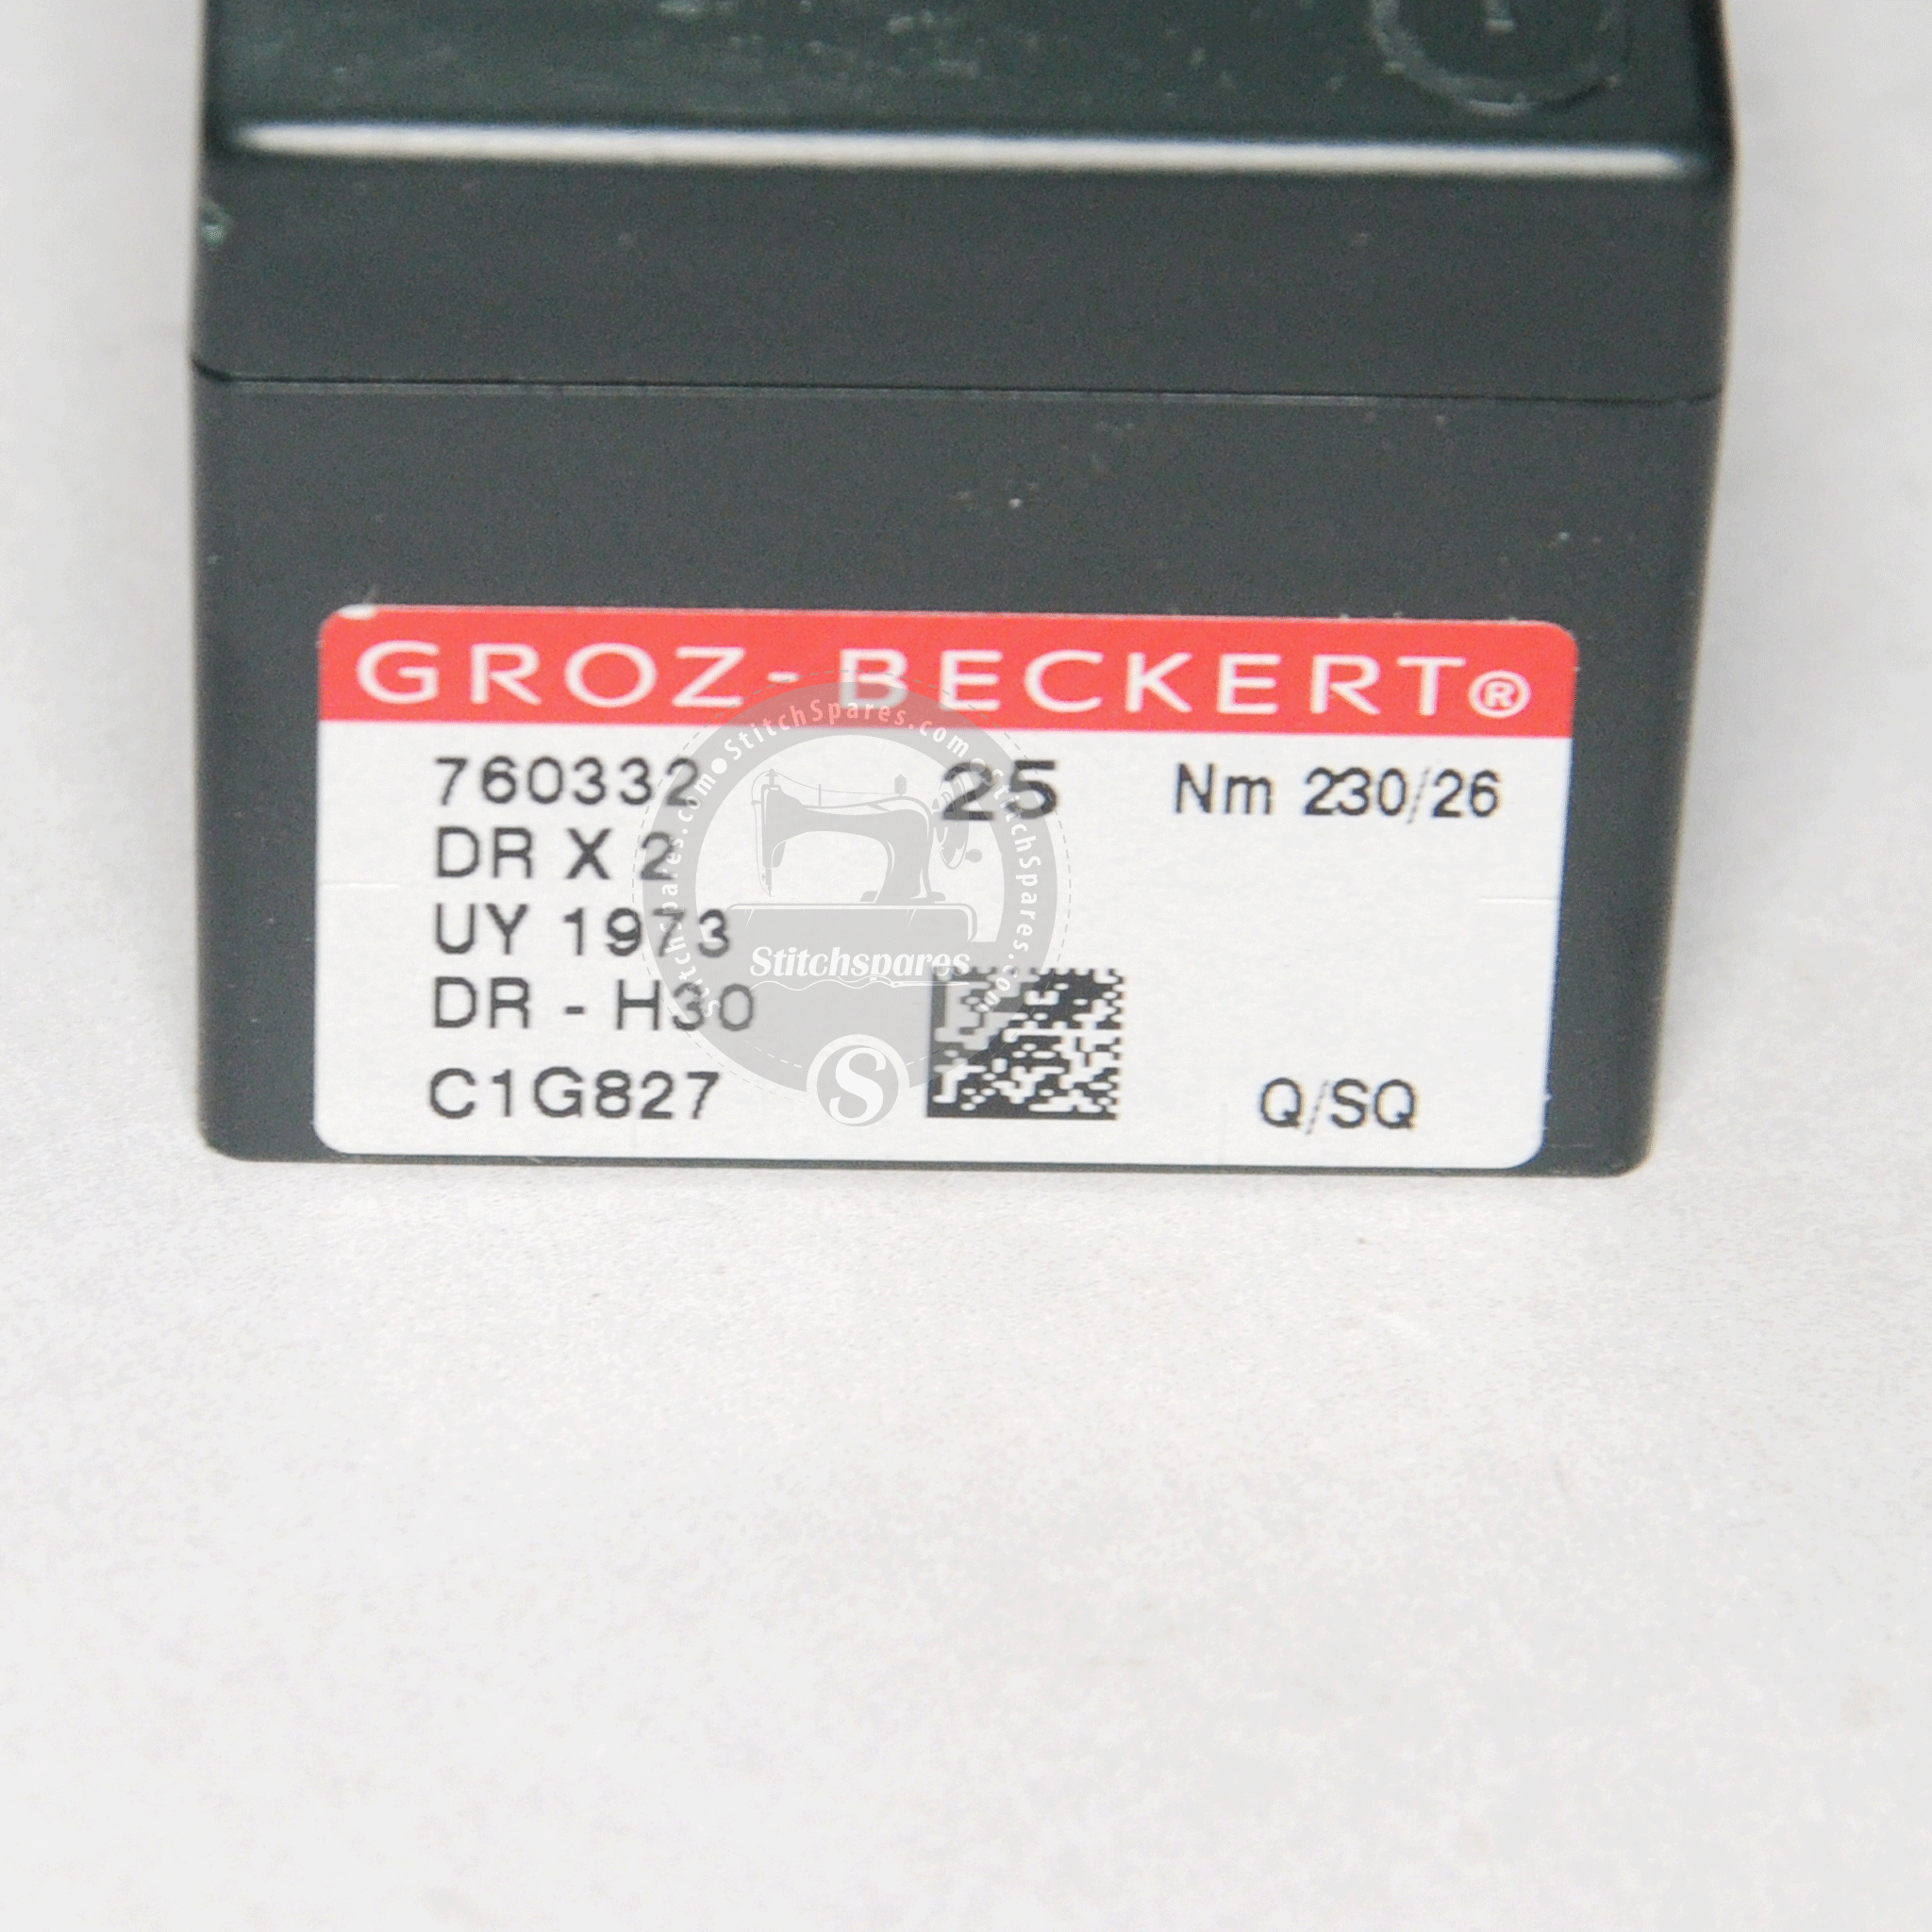 DRX2 UY 1973 SY5060 124X2 Aguja Groz Beckert para máquina de cierre de bolsas (PAQUETE DE 25 AGUJAS)